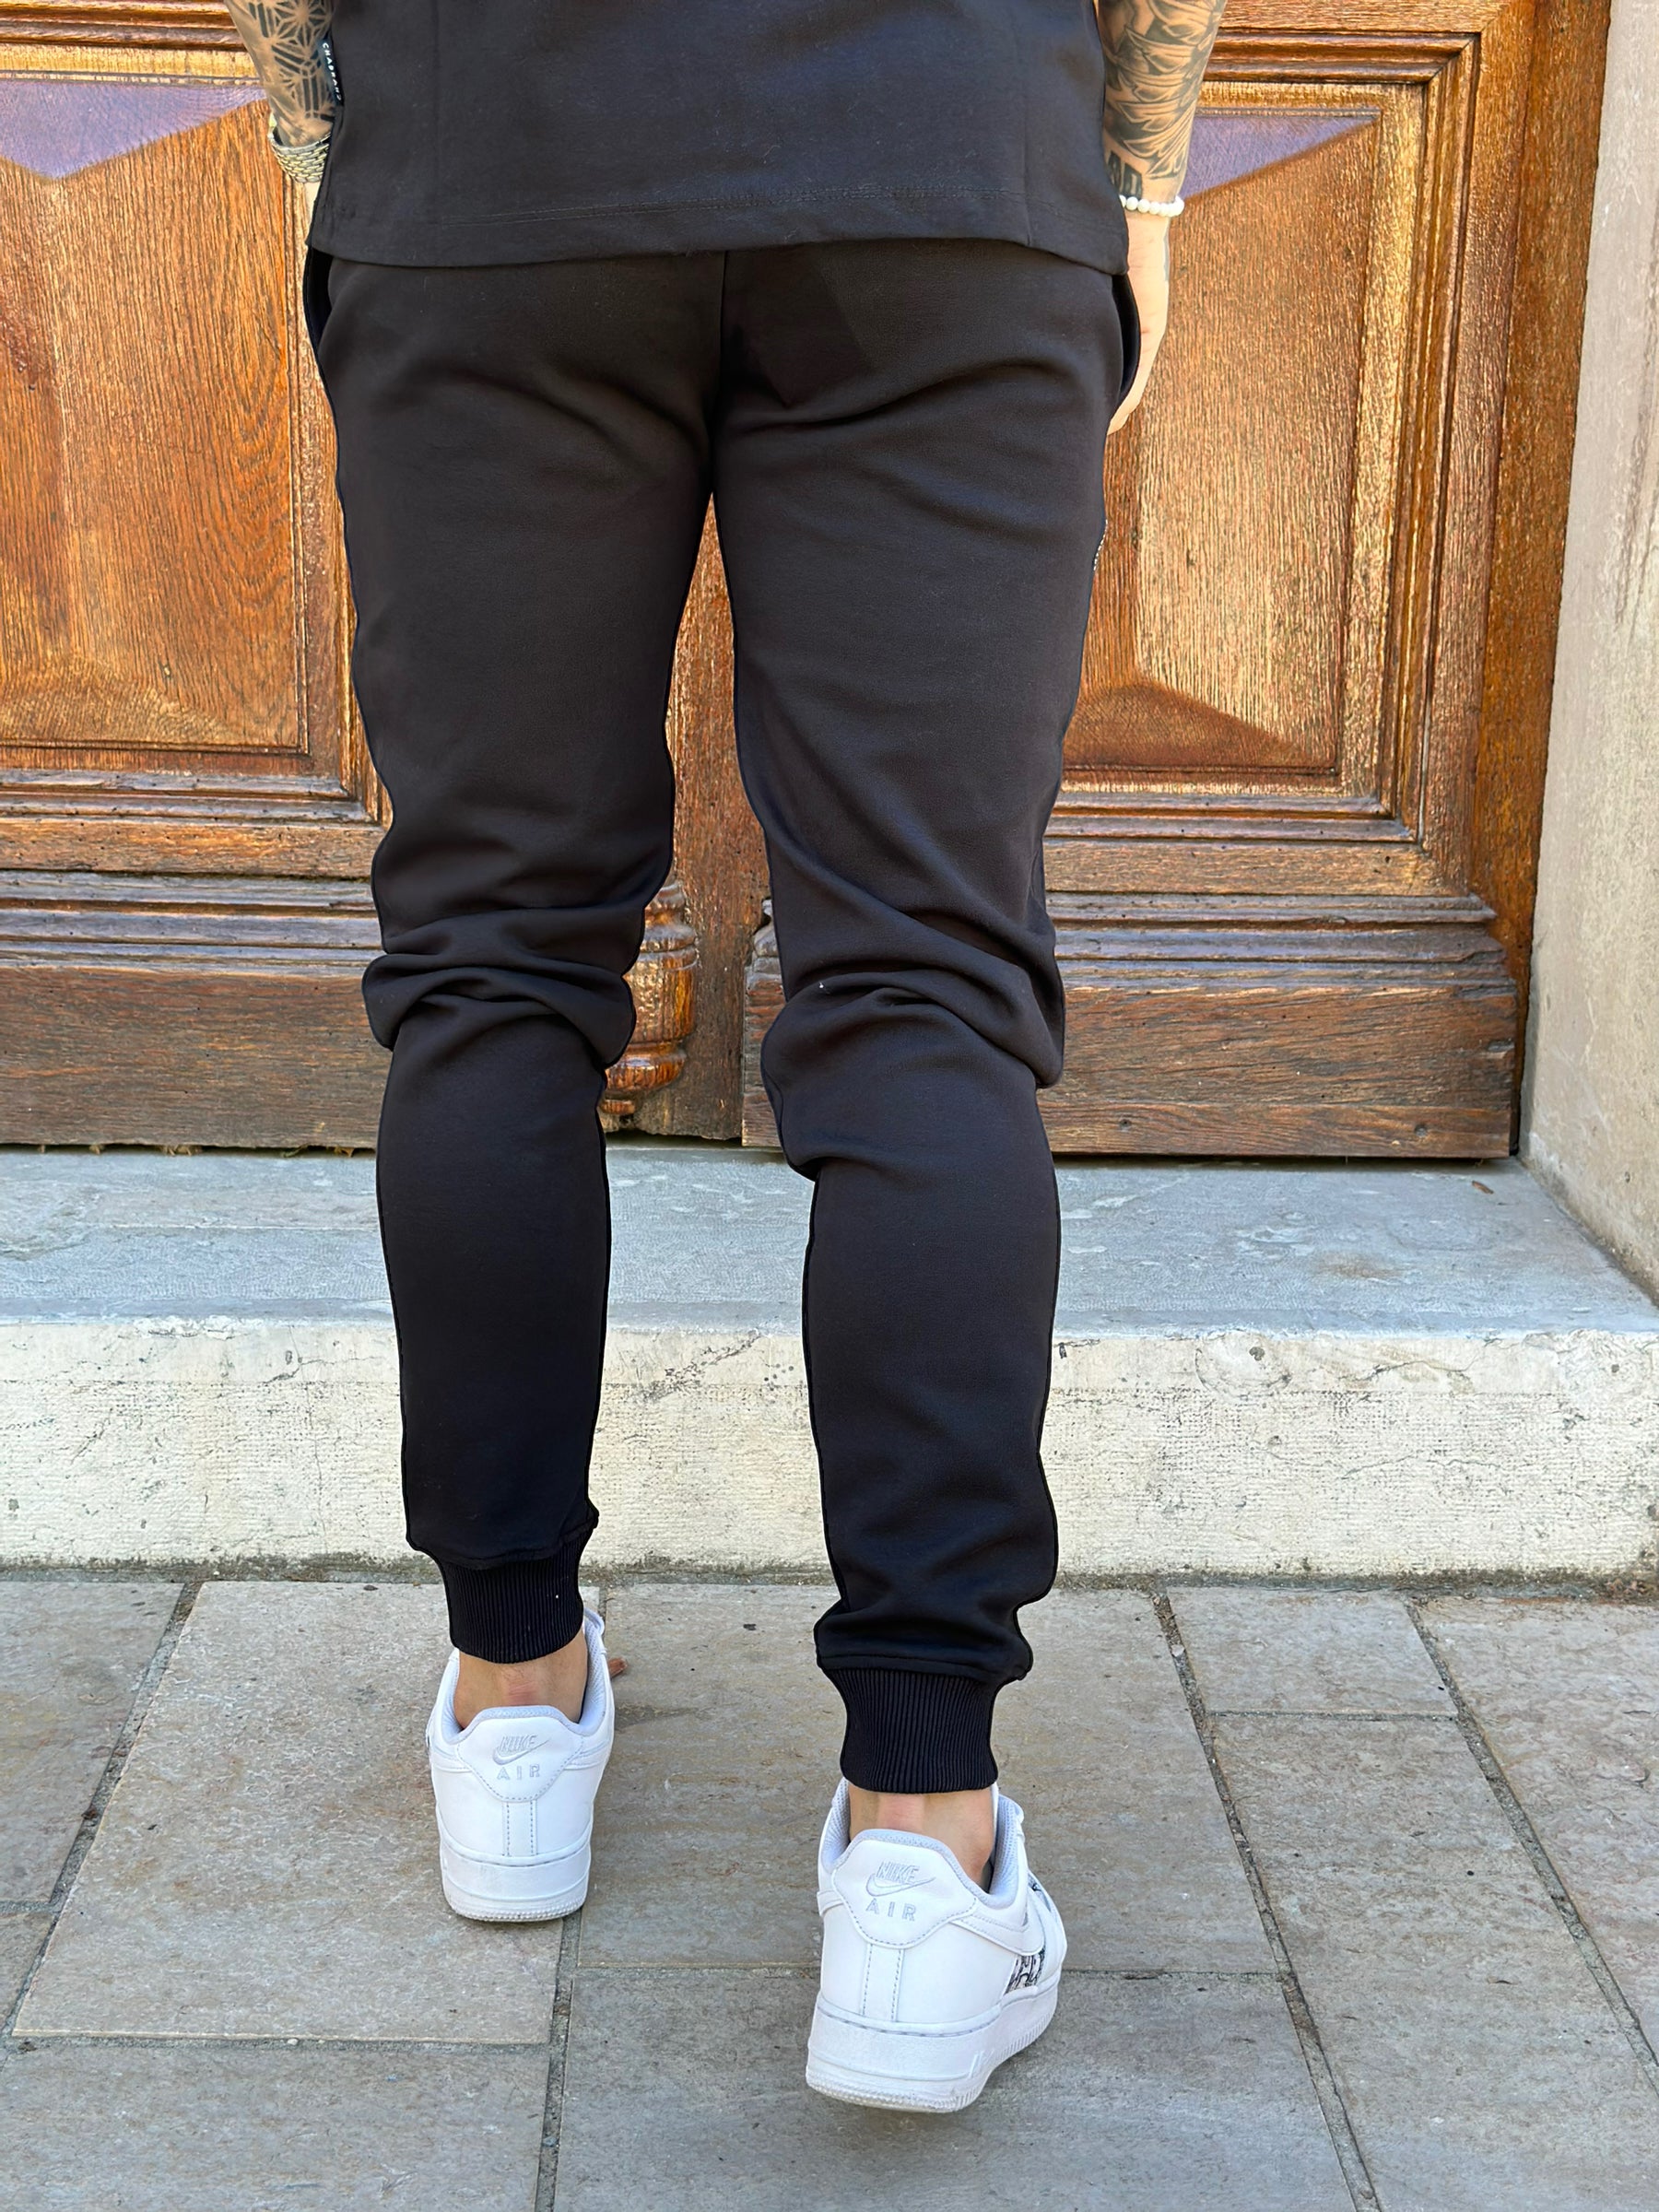 CHABRAND - Pantalon jogging noir petit signe blanc